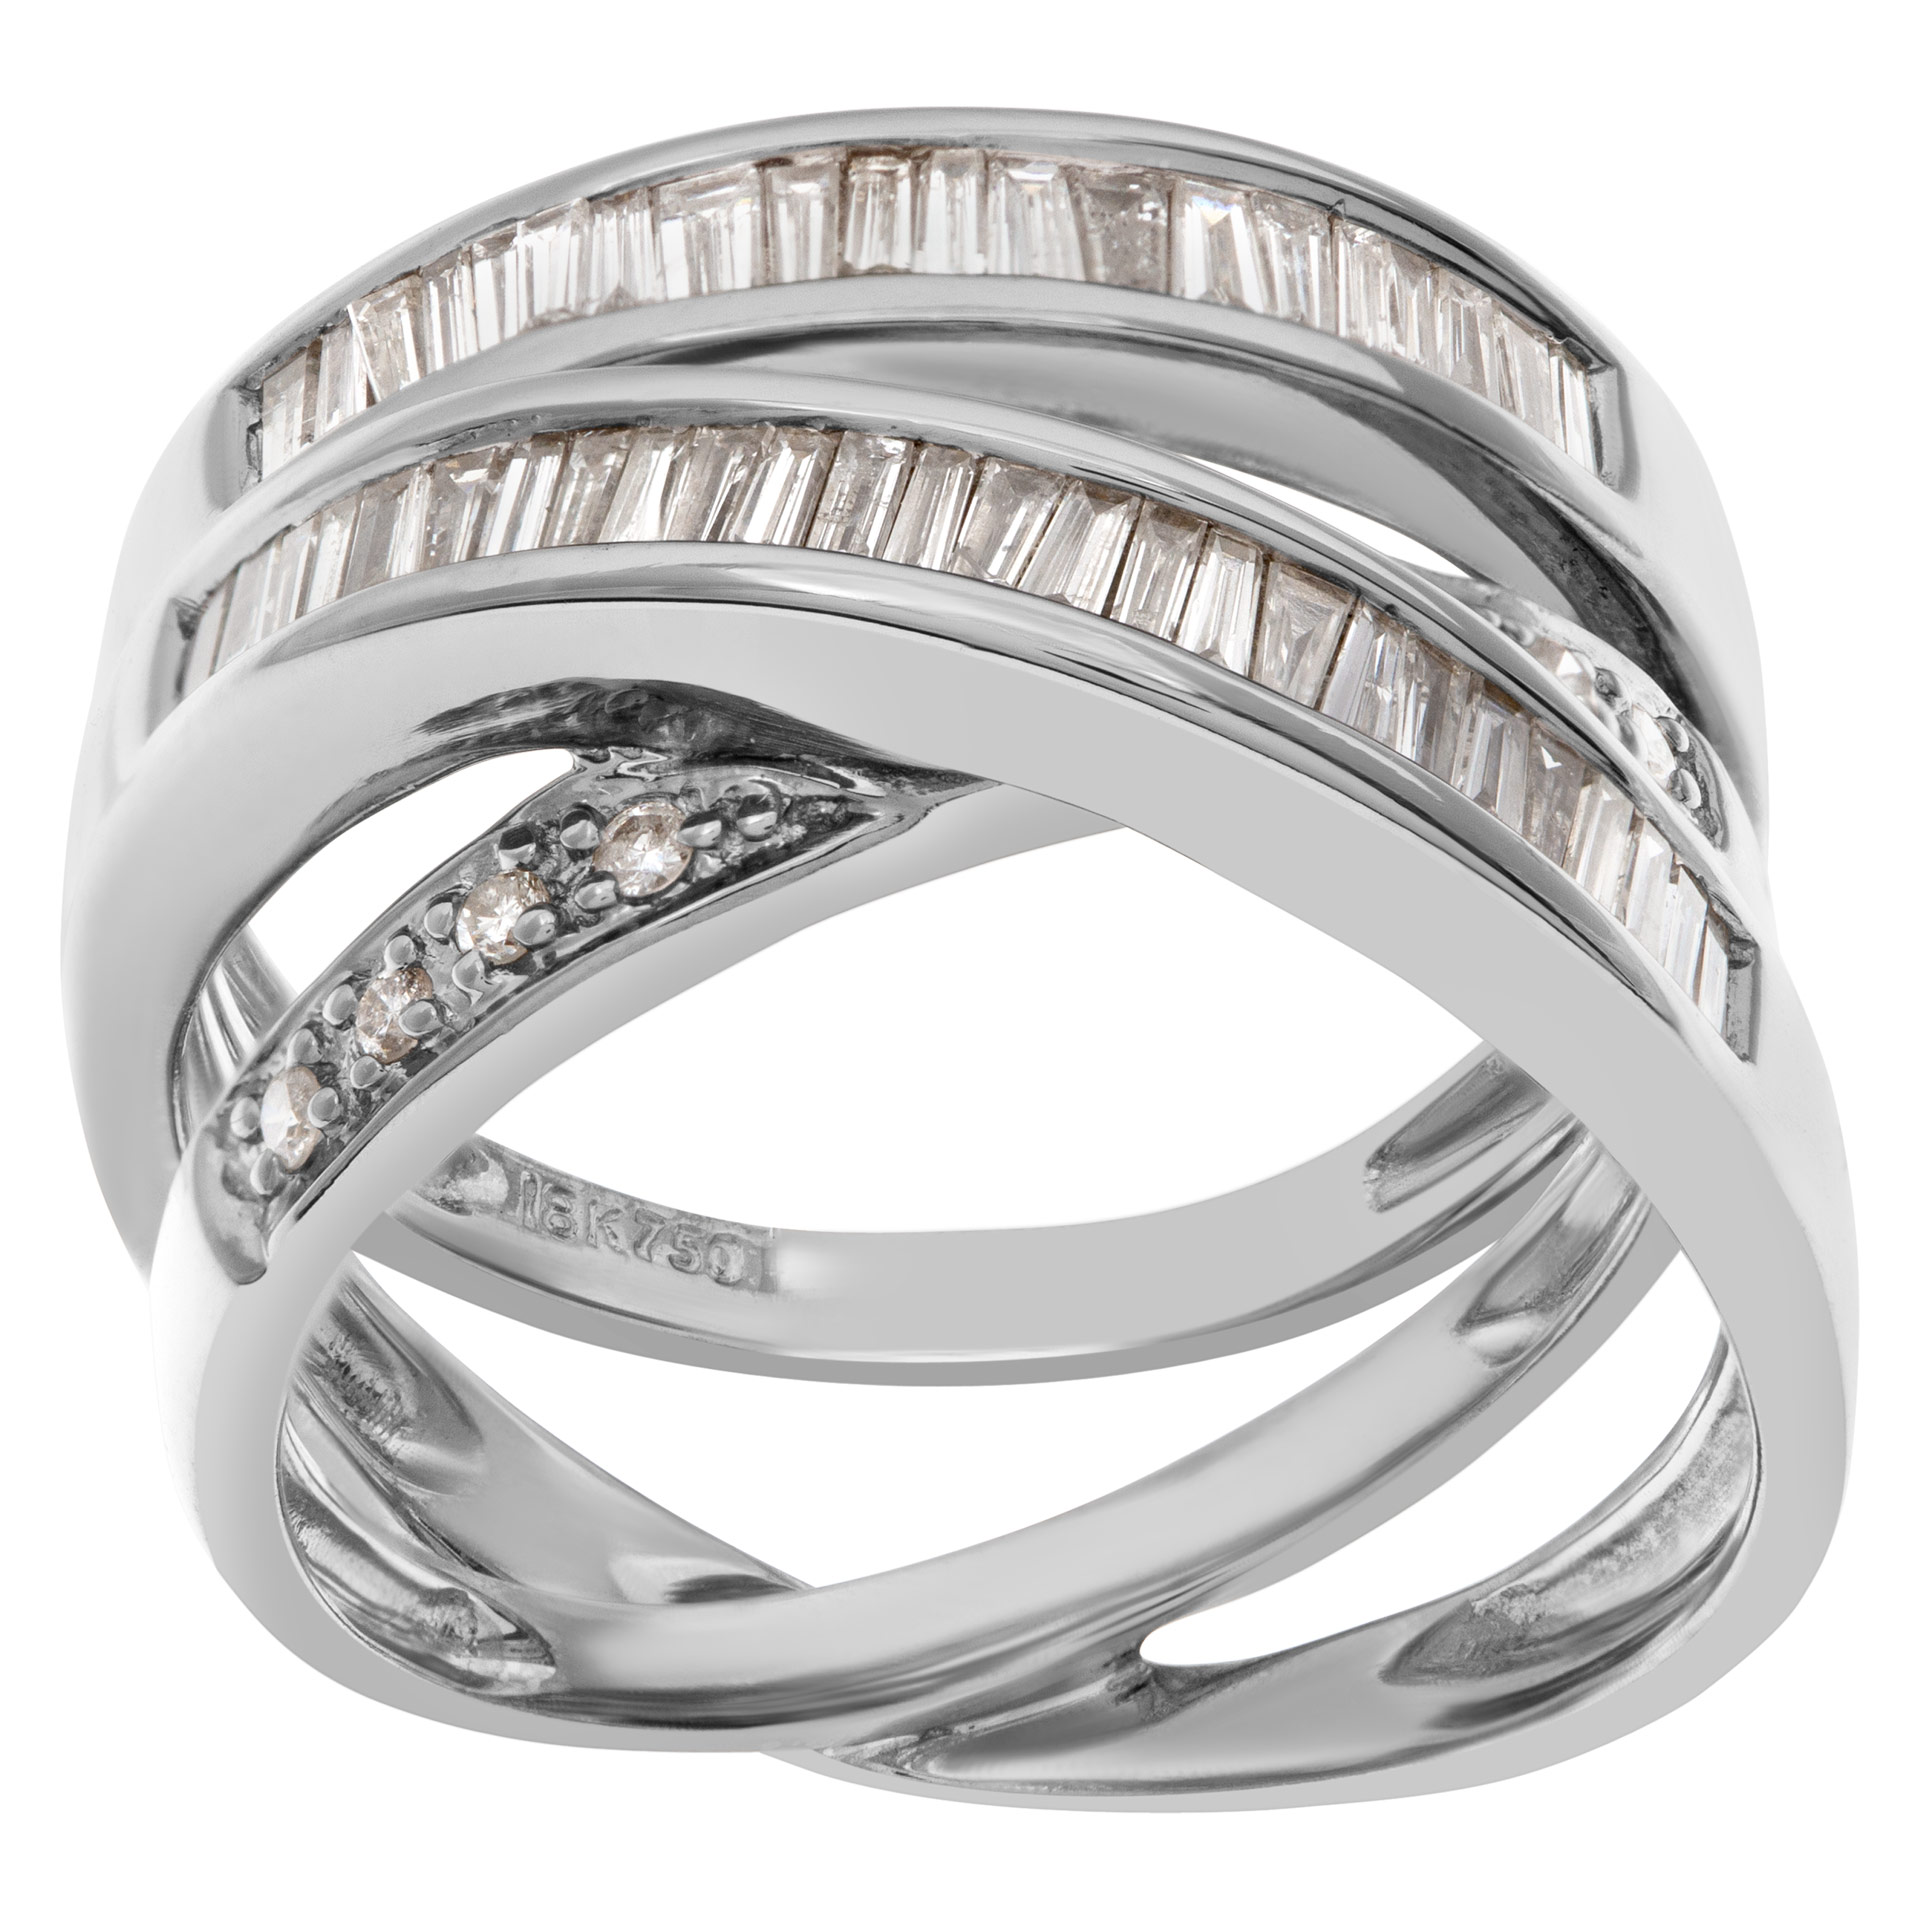 Diamond ring in 18k white gold